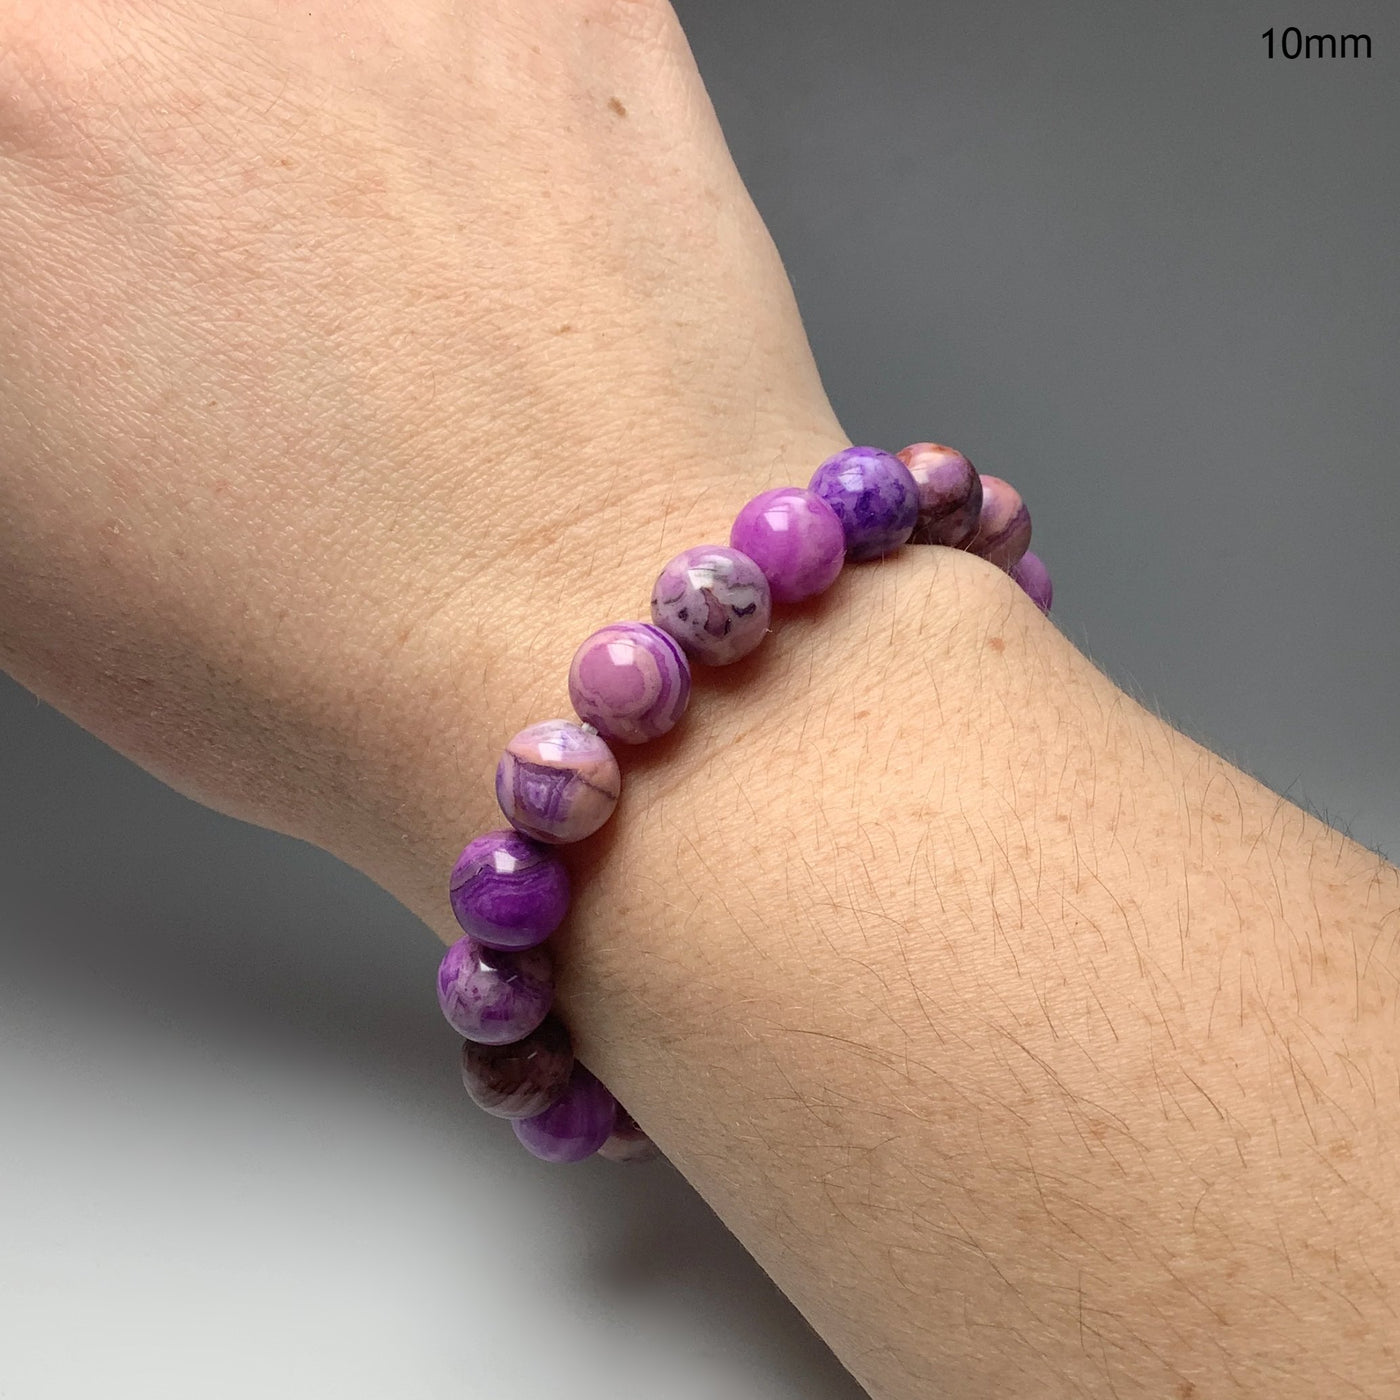 Purple Crazy Lace Agate Beaded Bracelet